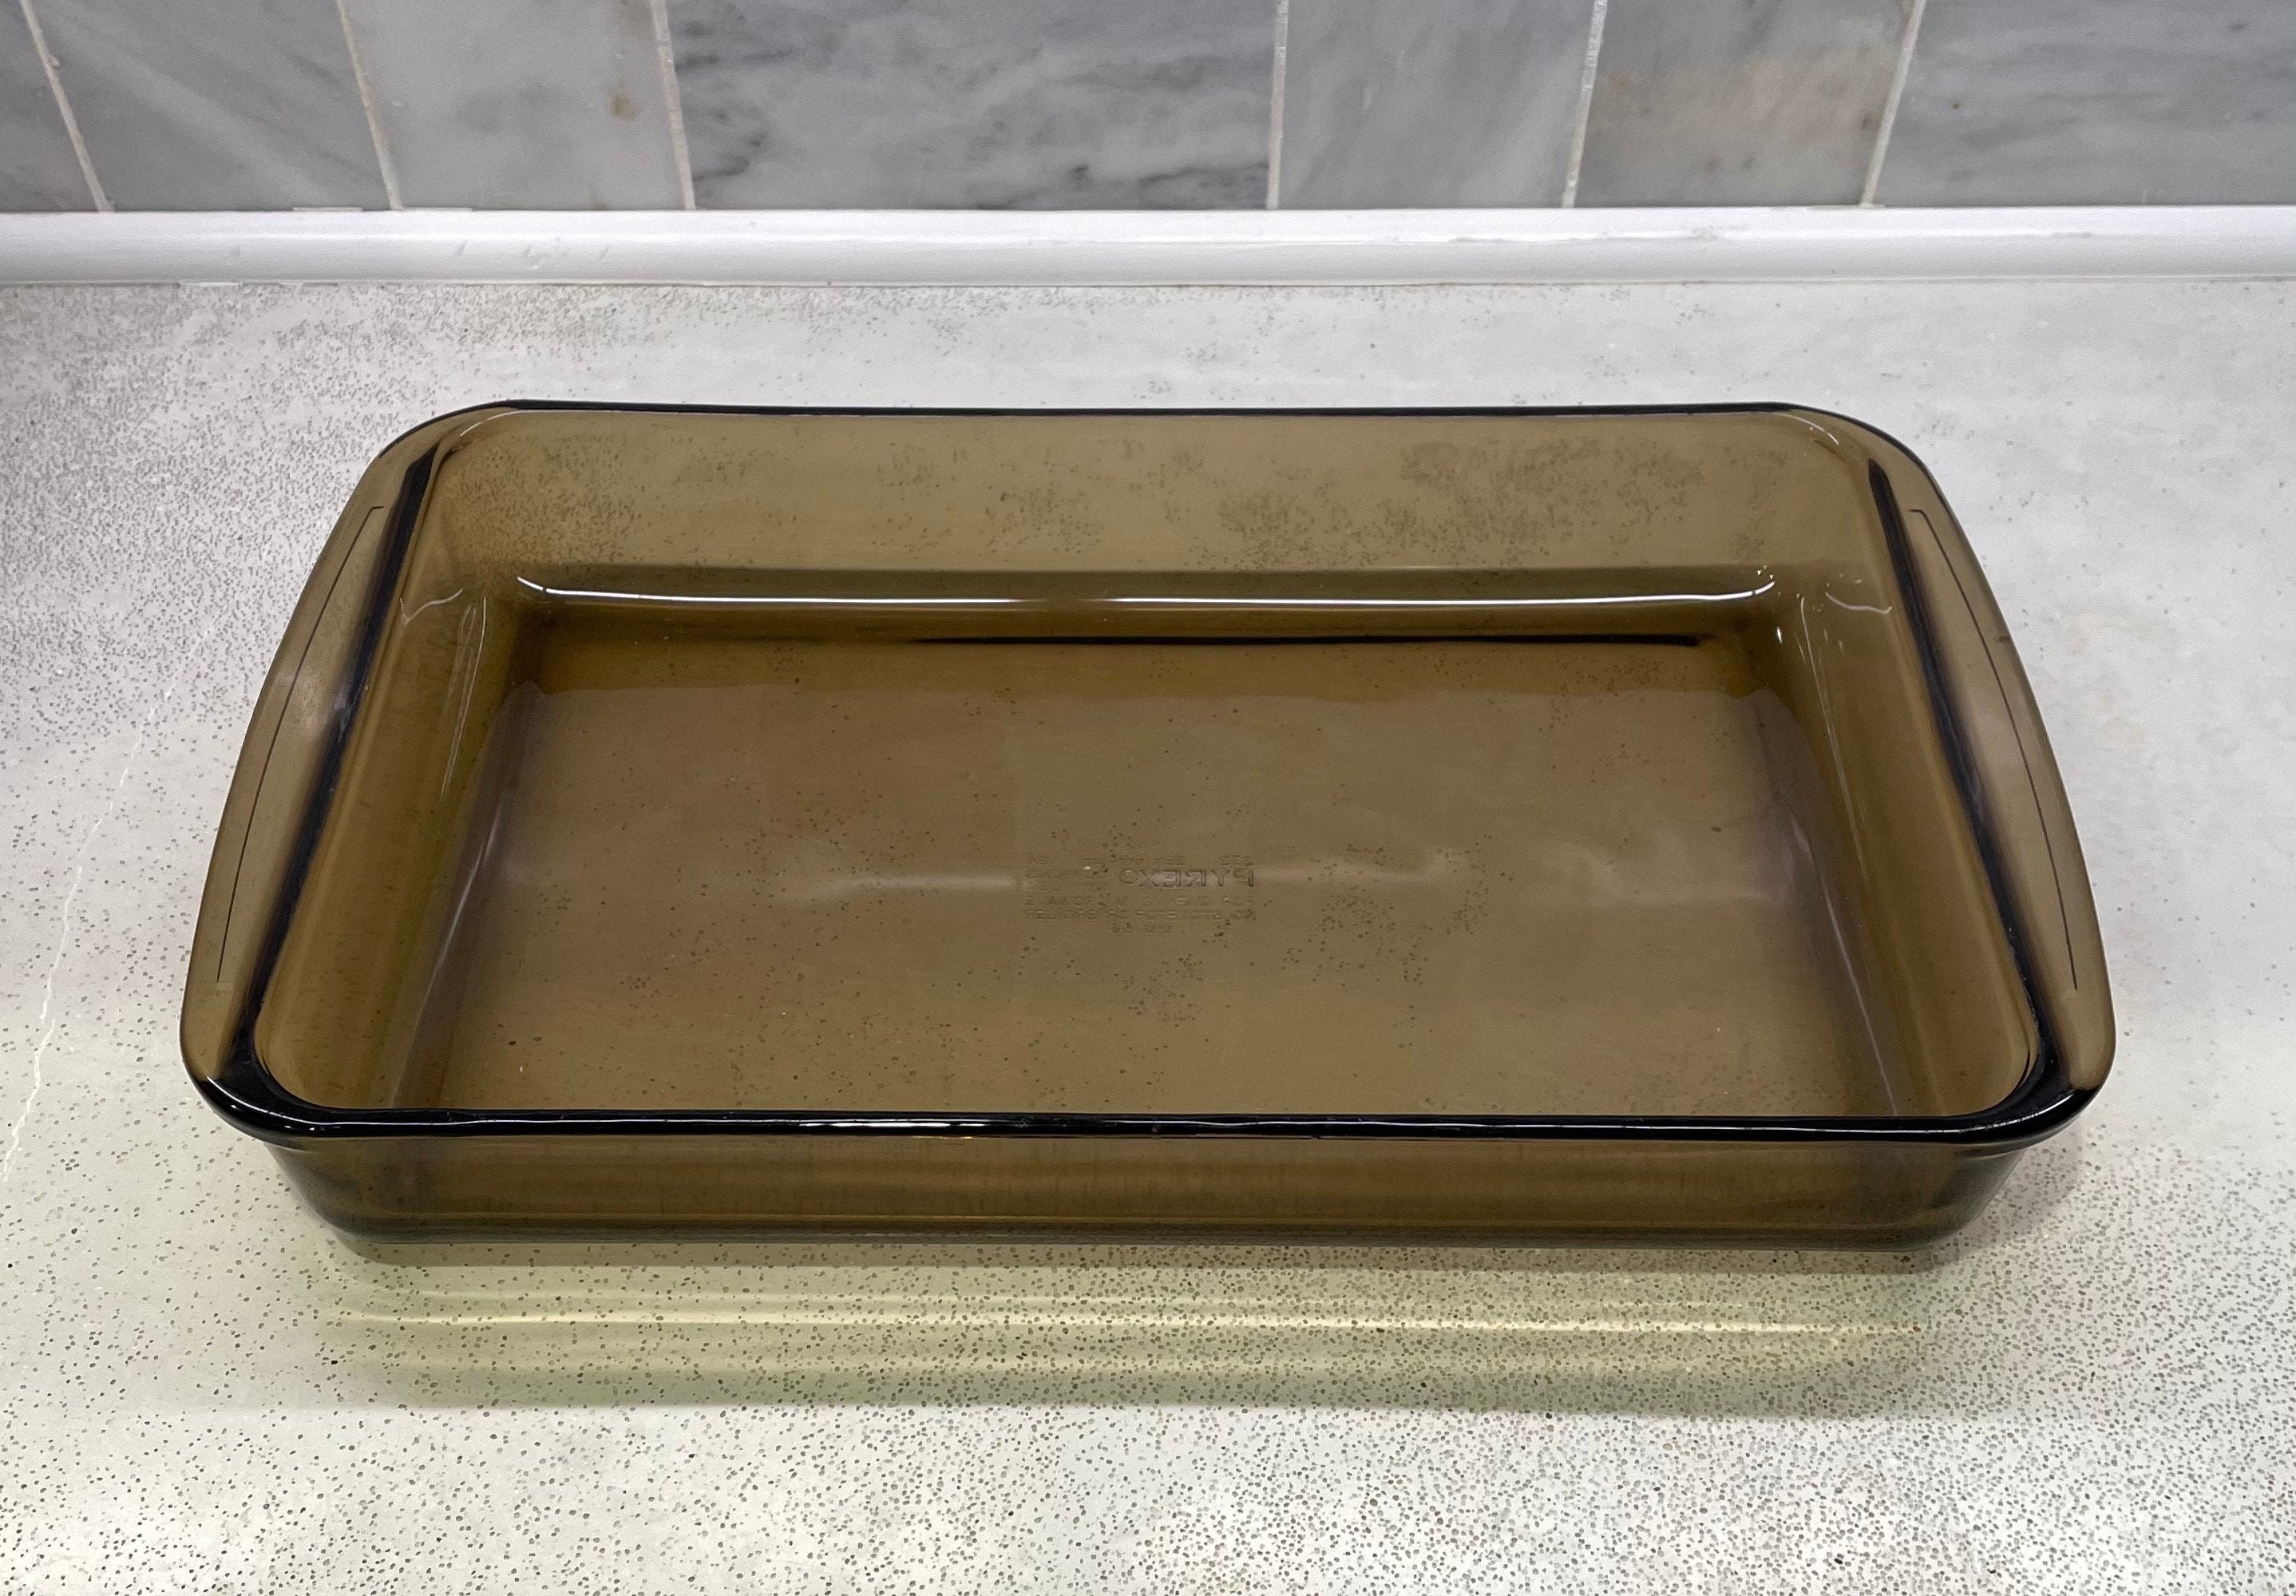 Amber Brown Glass 8x12 Baking Dish & Wicker Server Basket